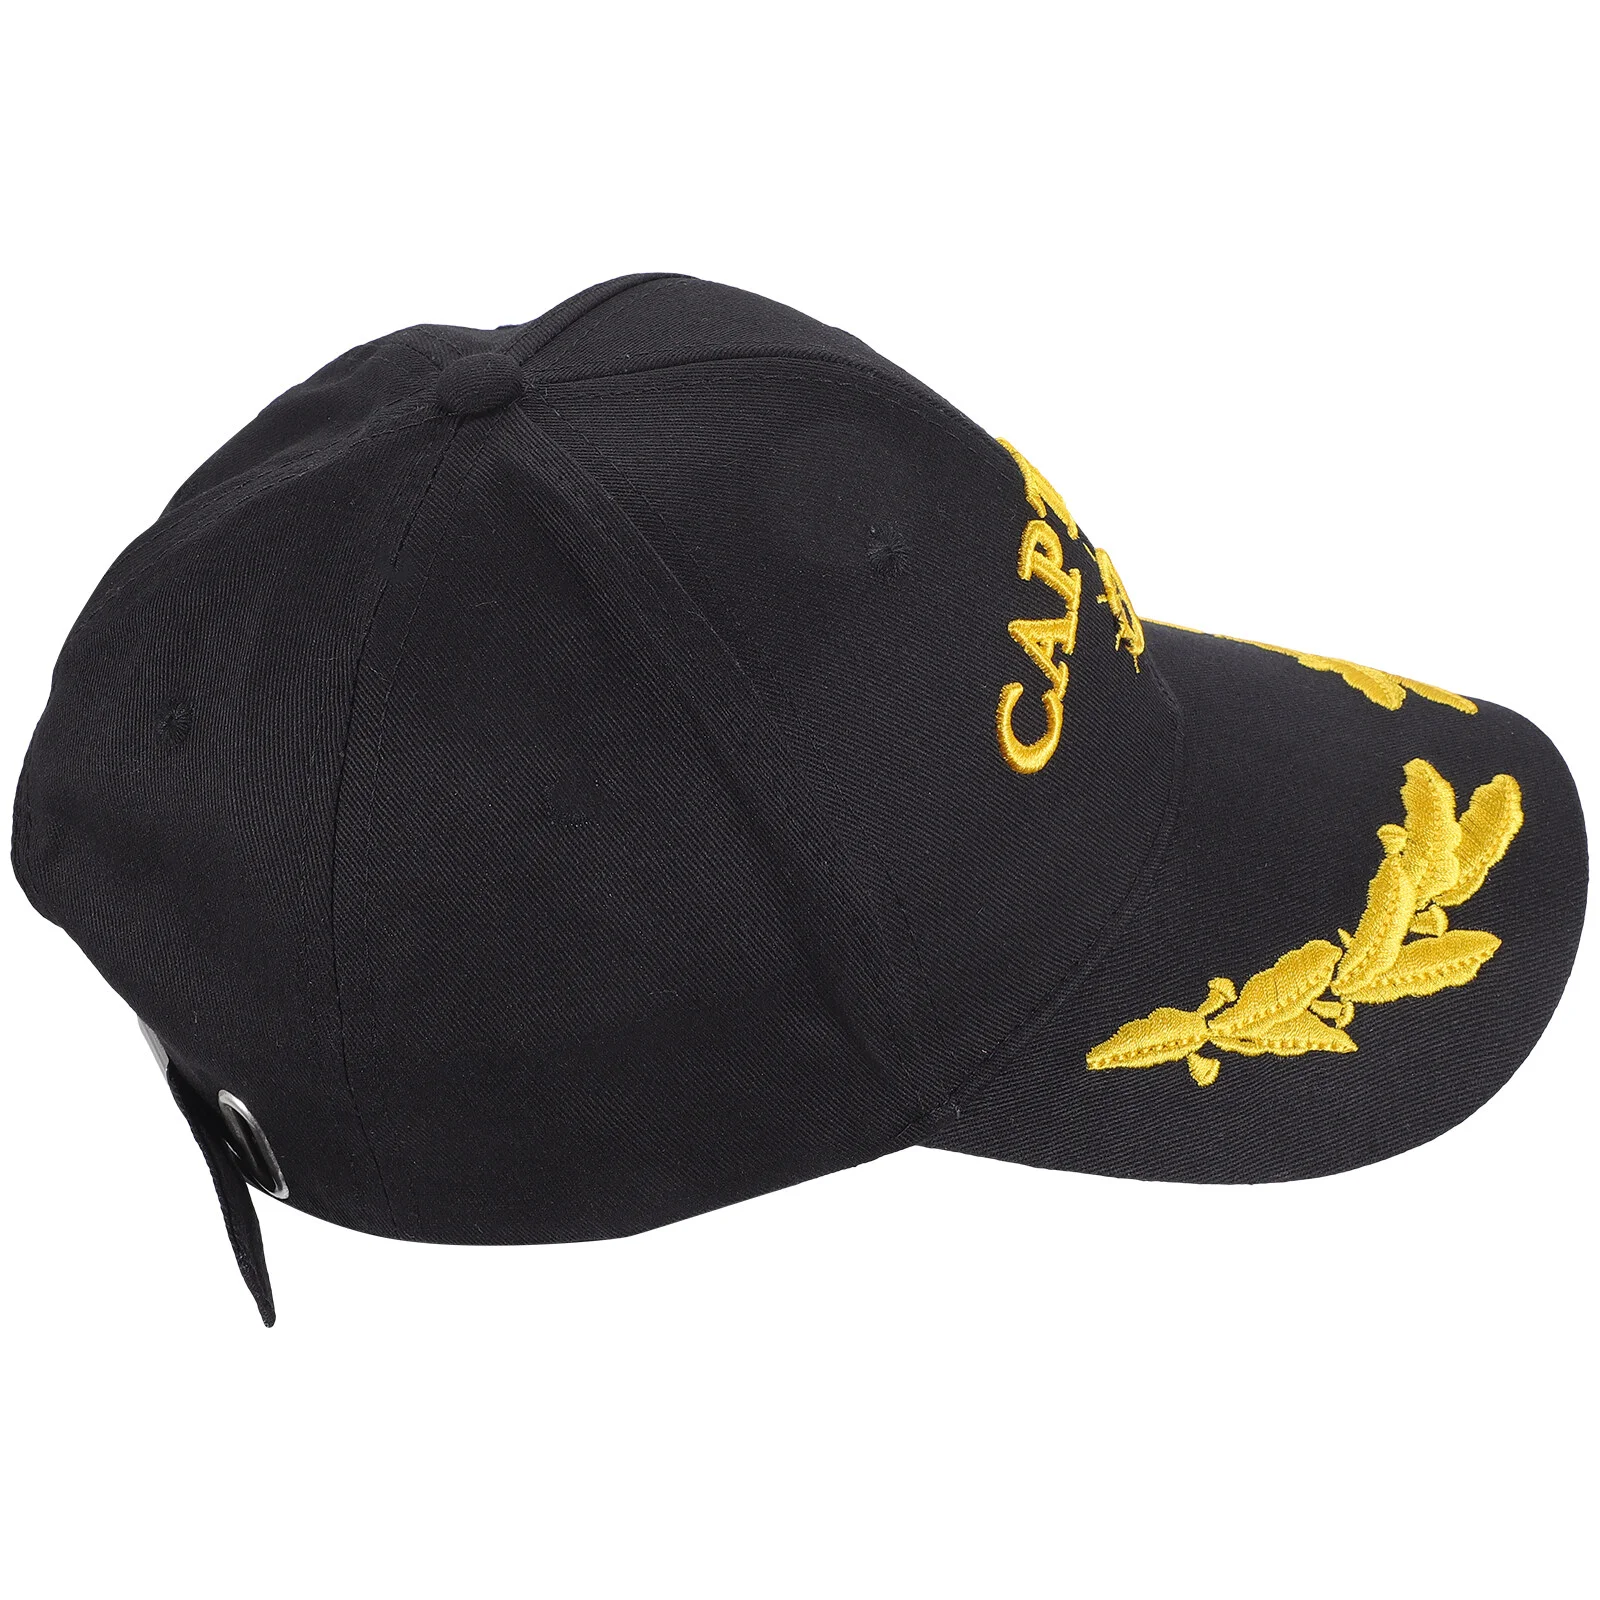 

Captain Hat Hats Men Fashion Adjustable Baseball Black Outdoor Peaked Women Cotton Dad Sun